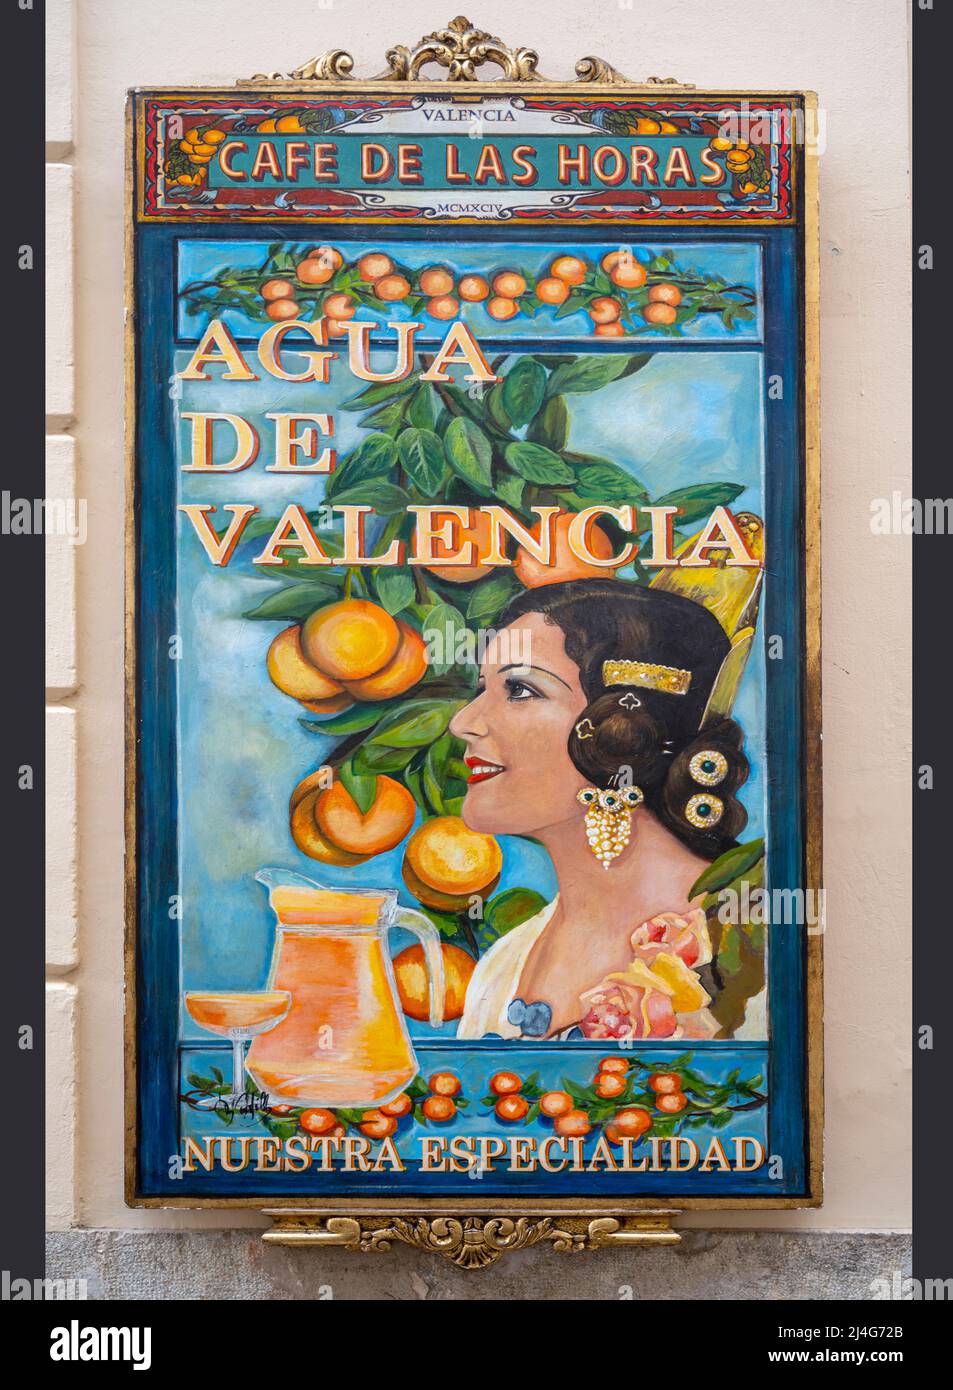 Spanien, Valencia, Carrer del Comte d'Almodóvar 1, Cafe de las Horas, Werbeschild für Aqua de Valencia, Banque D'Images